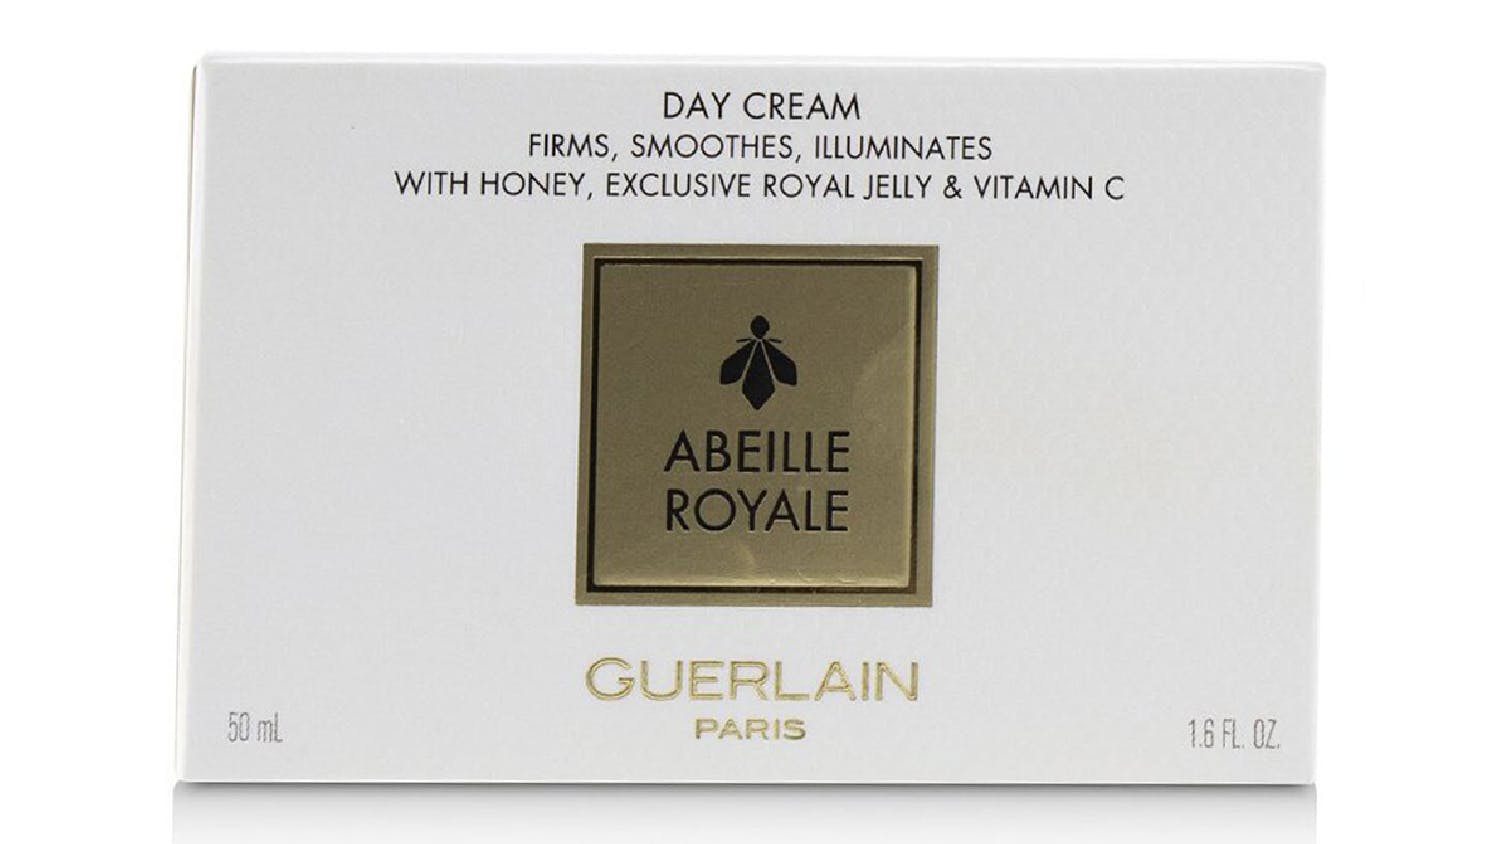 Guerlain Abeille Royale Day Cream - Firms, Smoothes and Illuminates - 50ml/1.6oz